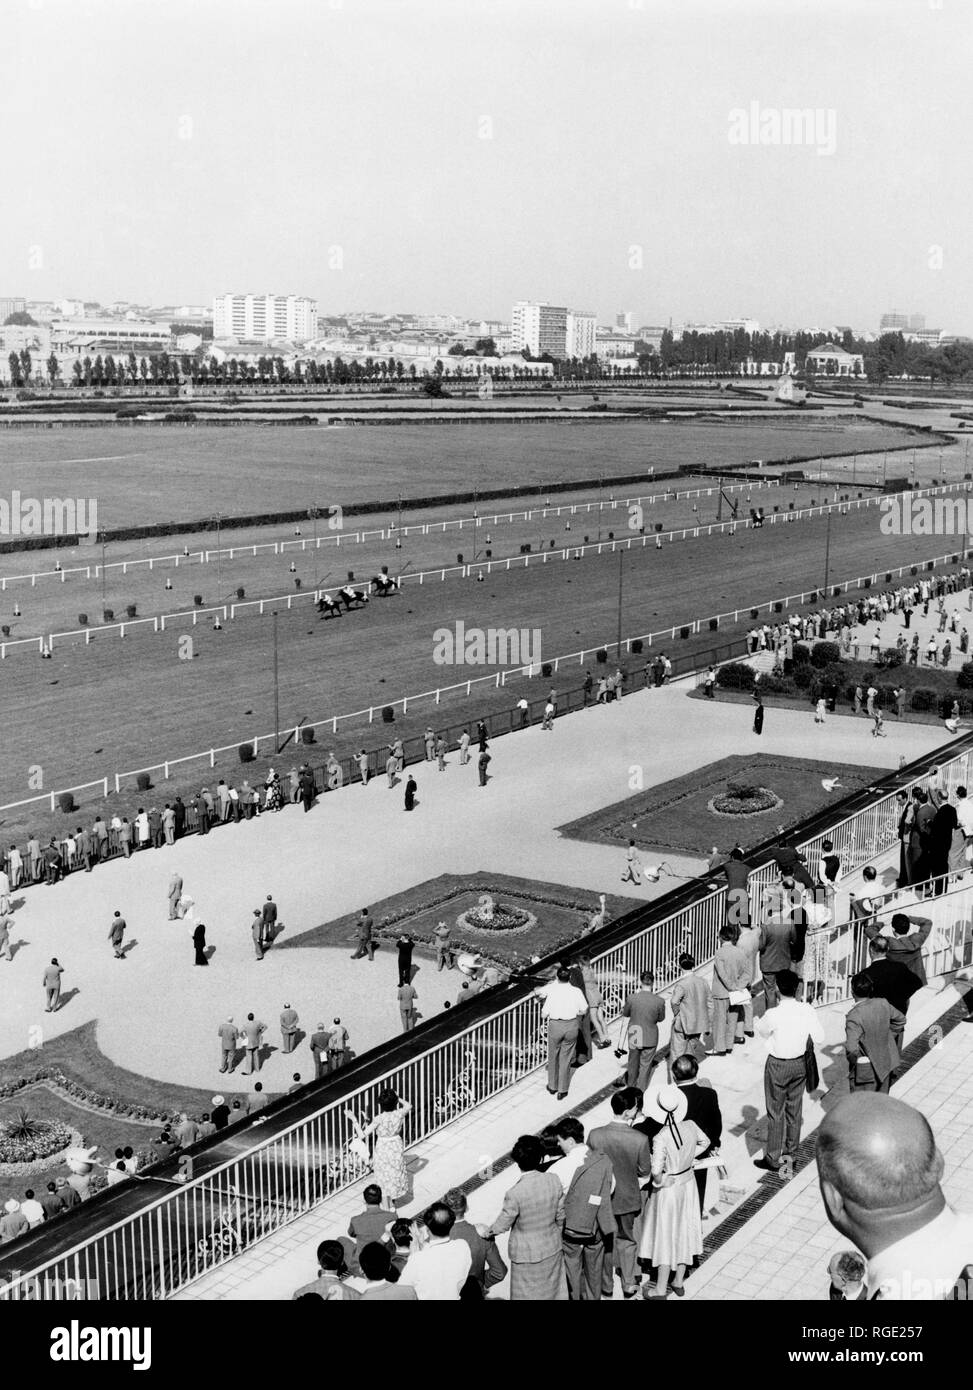 L'Italia, Lombardia, Milano San Siro ippodromo, 1955 Foto stock - Alamy